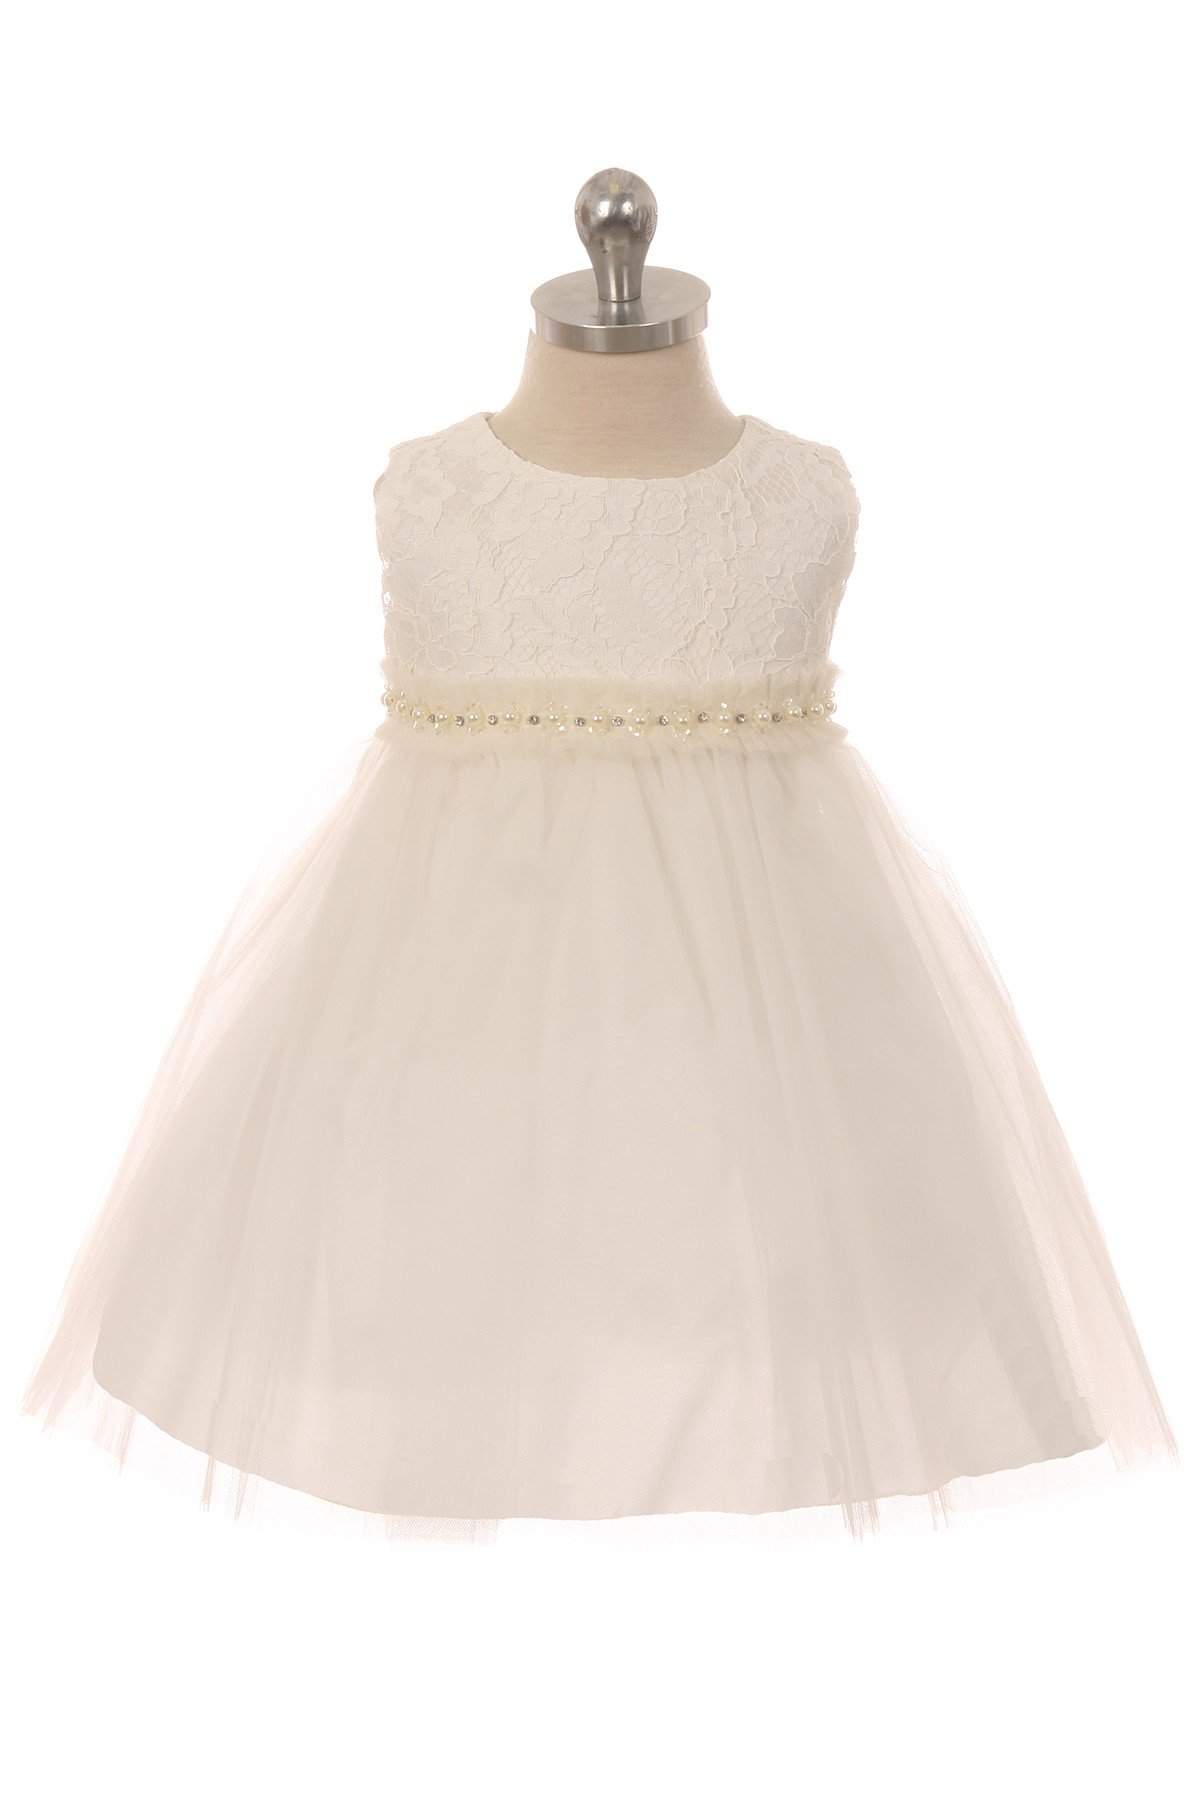 Lace Dress w/ Mesh Pearl Trim - Baby-Kid's Dream-Baby,Baby Clothes,Baby dress,baby Party Dress,Flower Girl,Toddler,Toddler Clothes,Toddler Dress,Toddlers